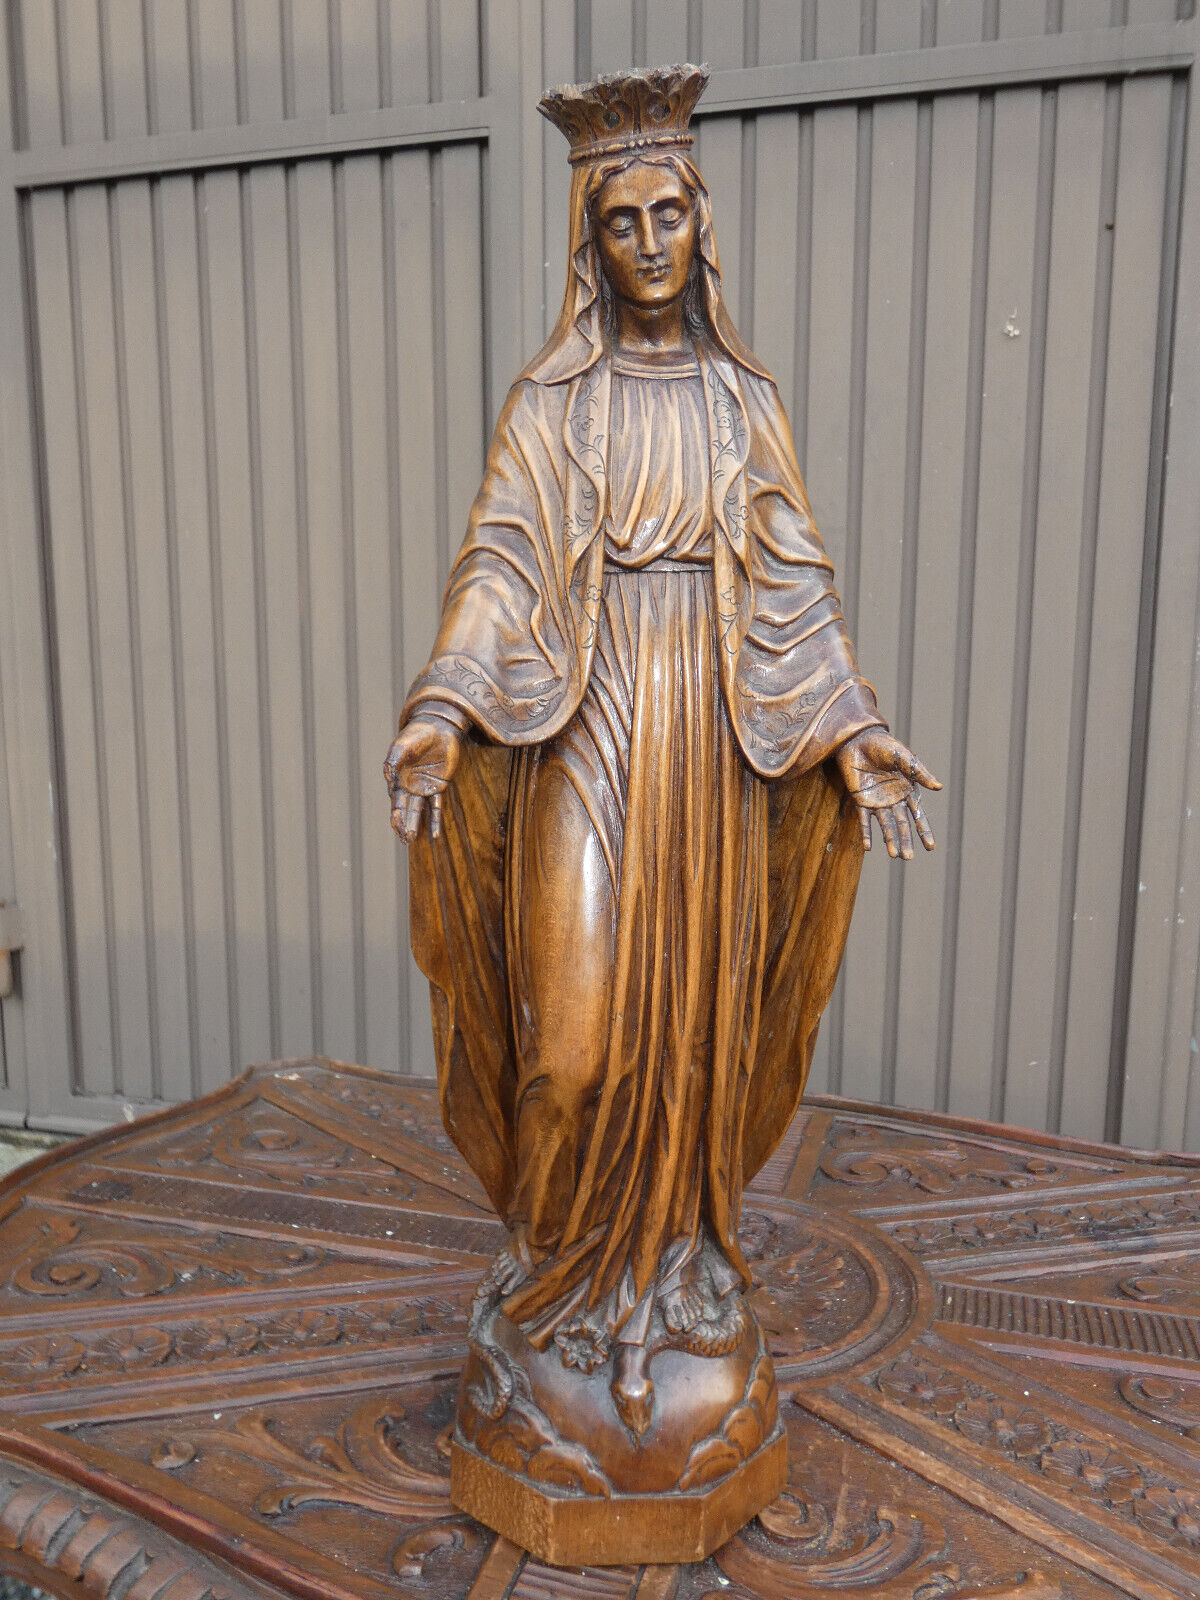 Antique Flanders School wood carved madonna statue sculpture religious